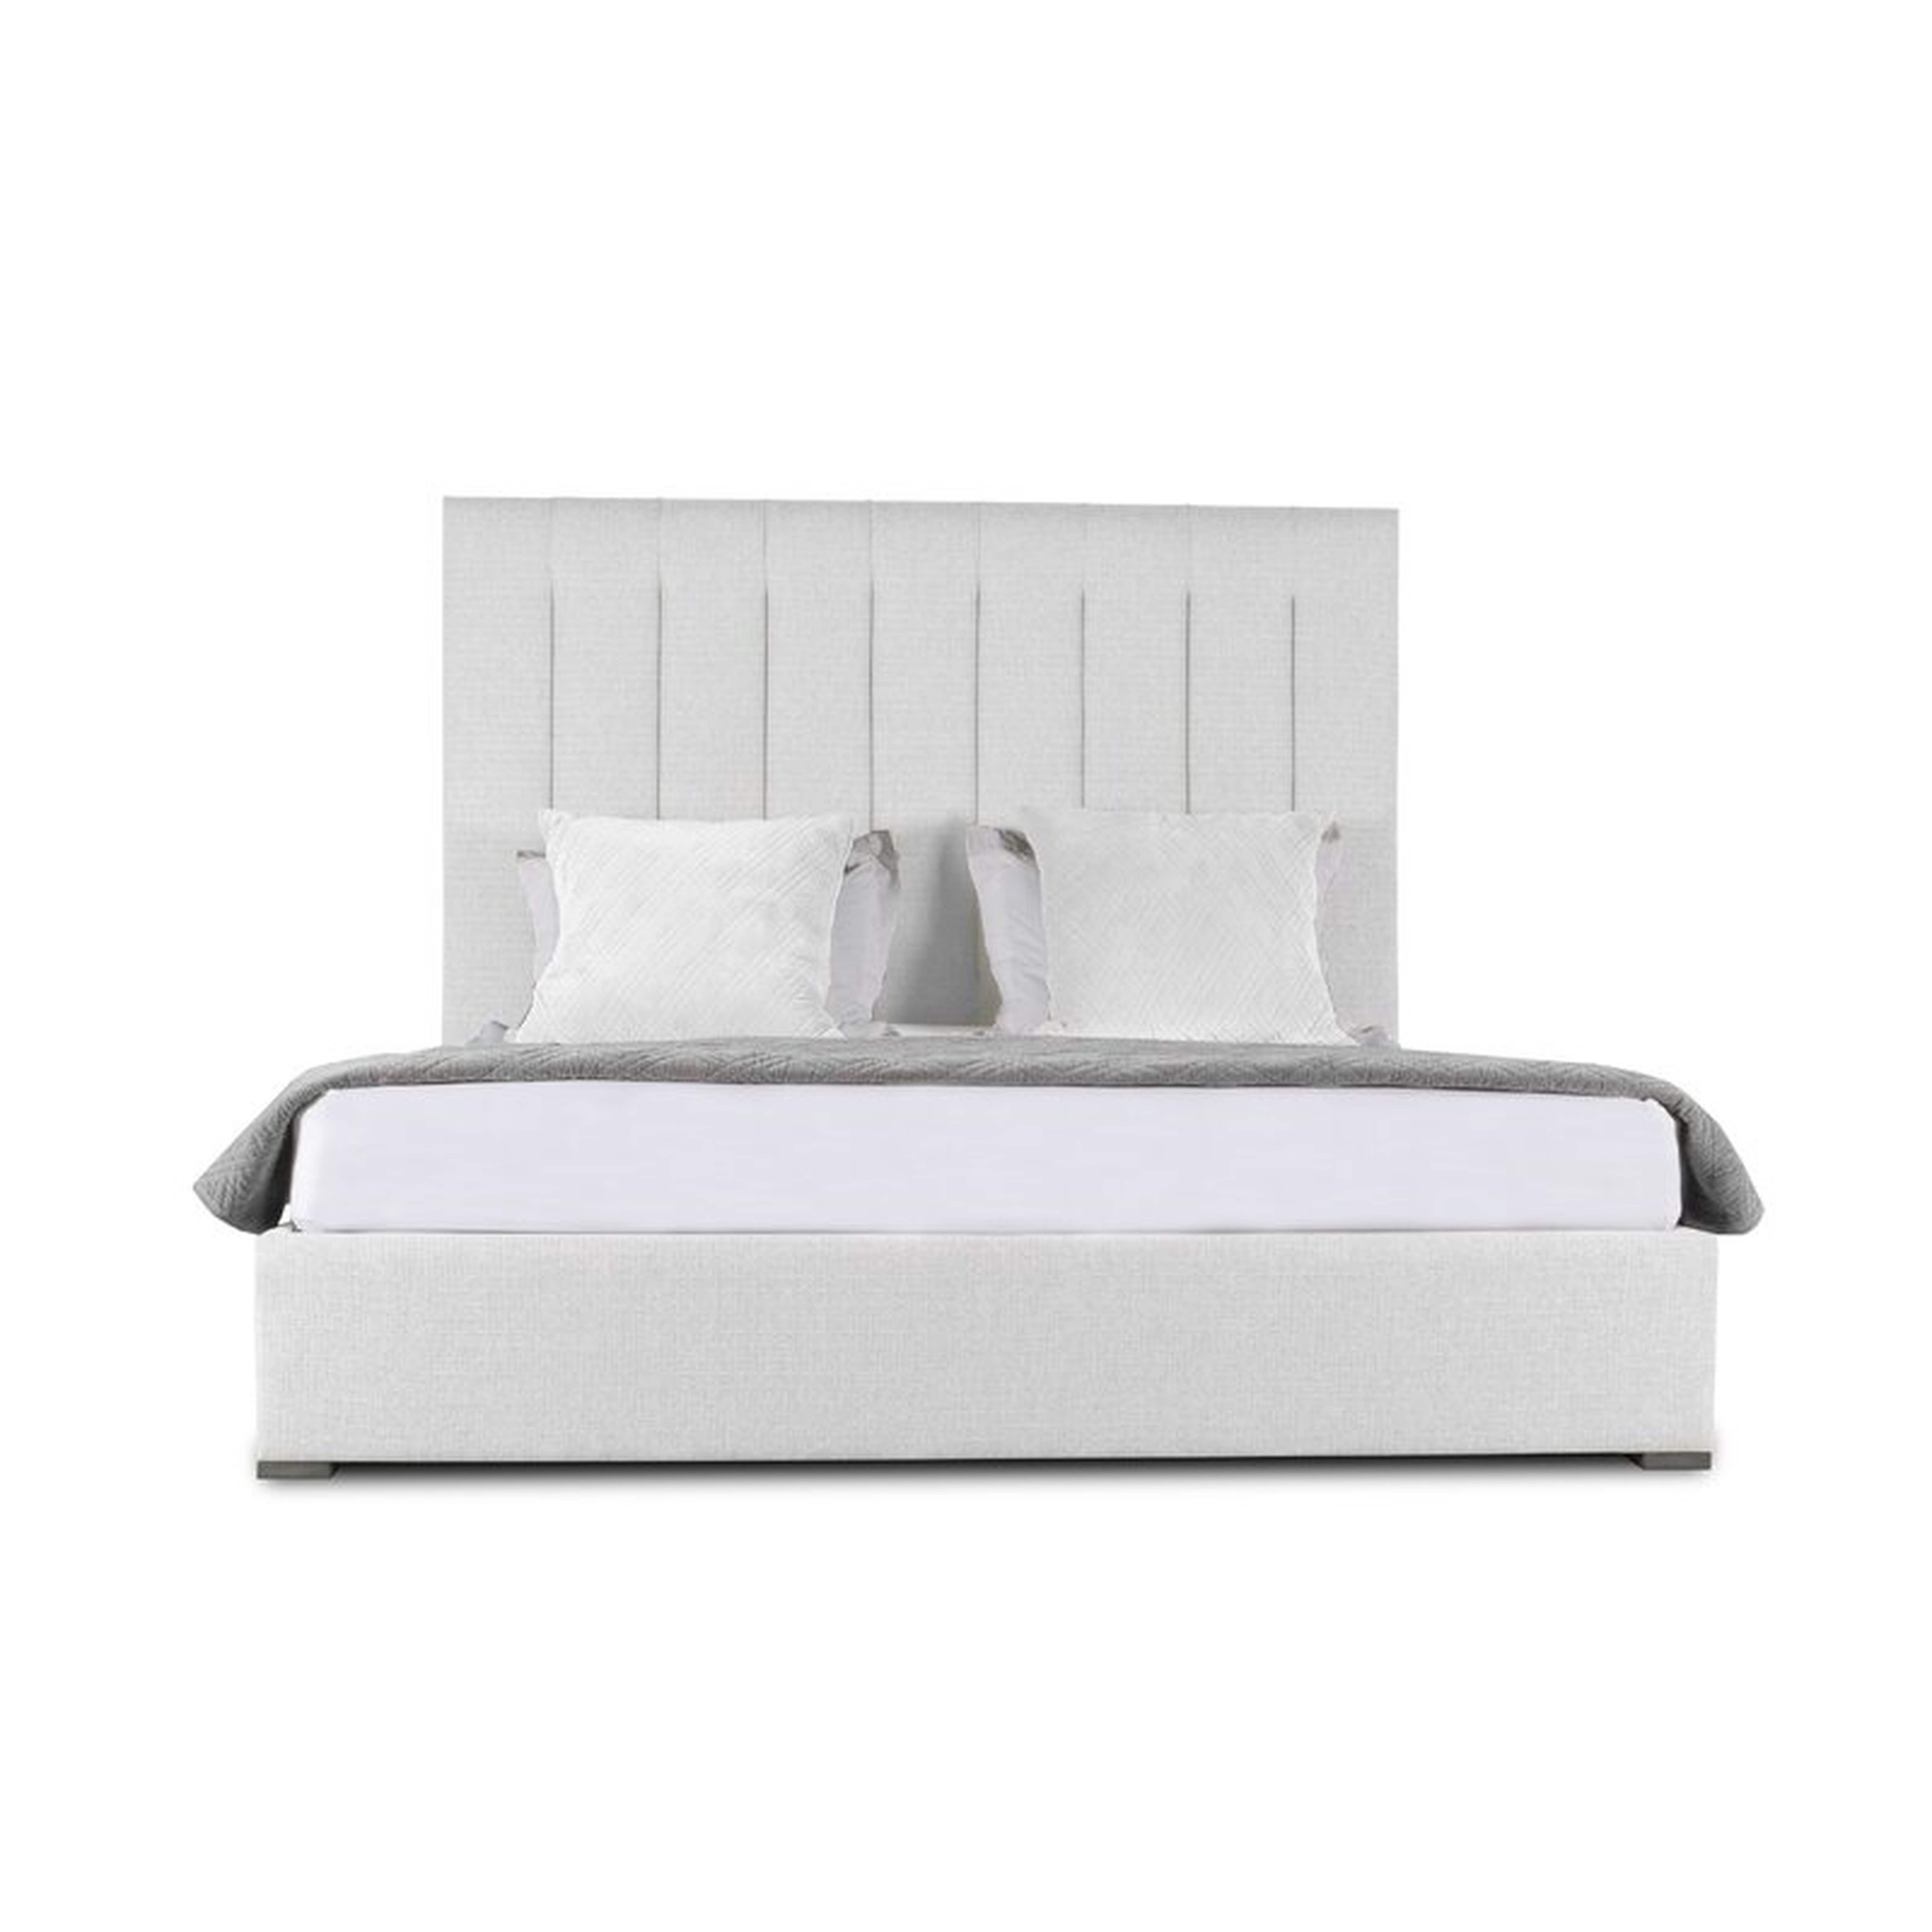 Handley Upholstered Standard Bed-King-White - Wayfair